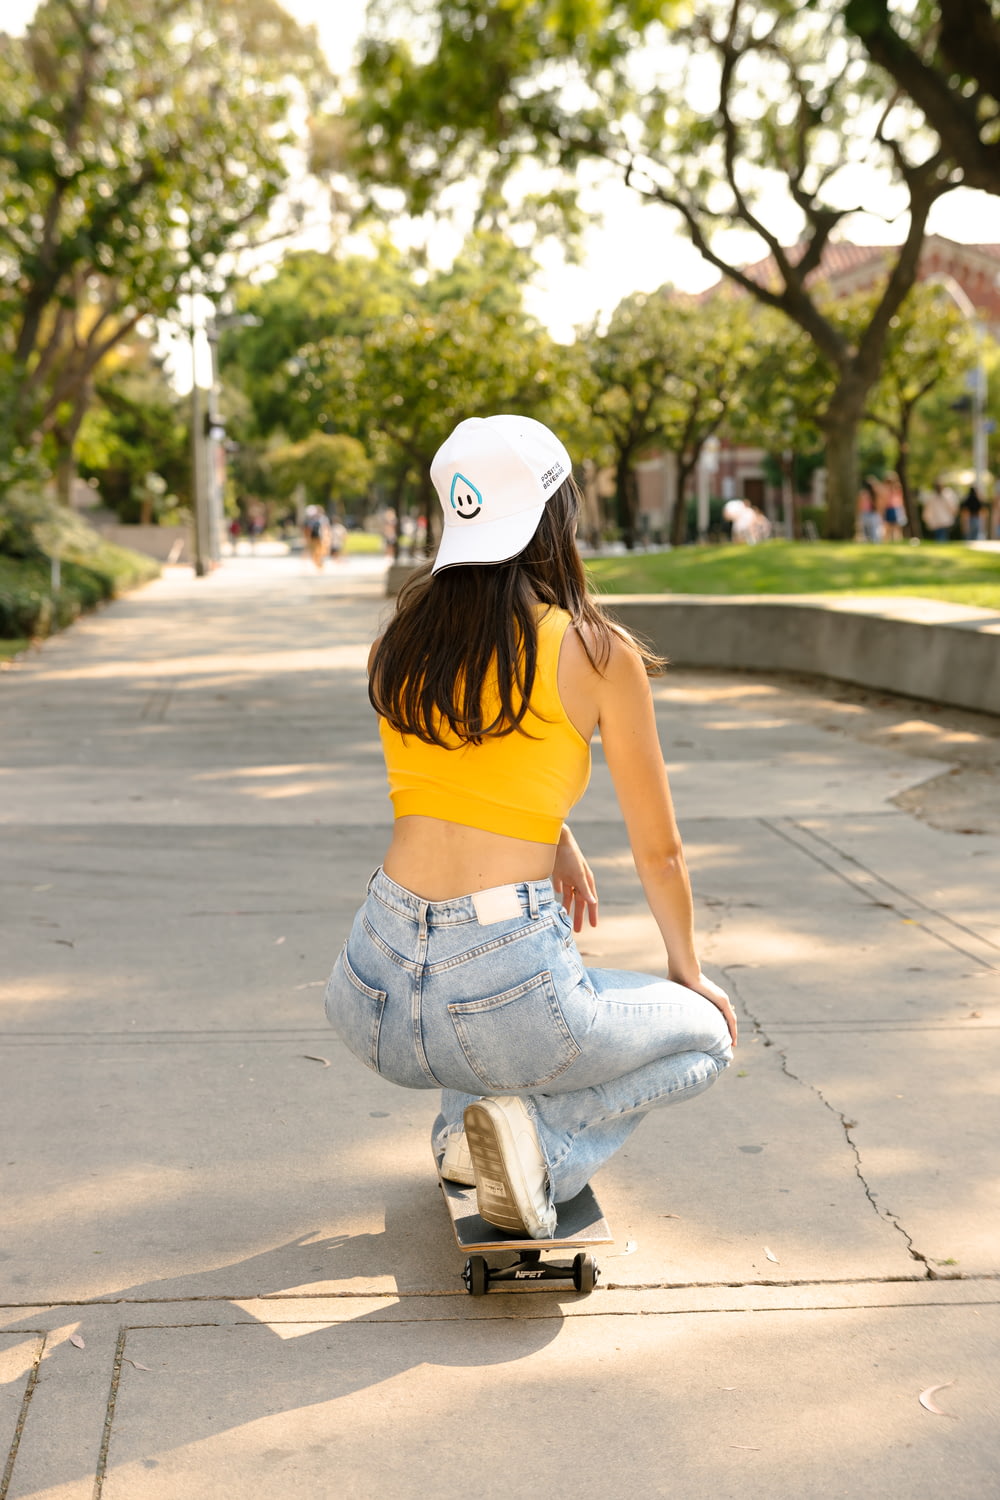 a woman riding a skateboard down a sidewalk